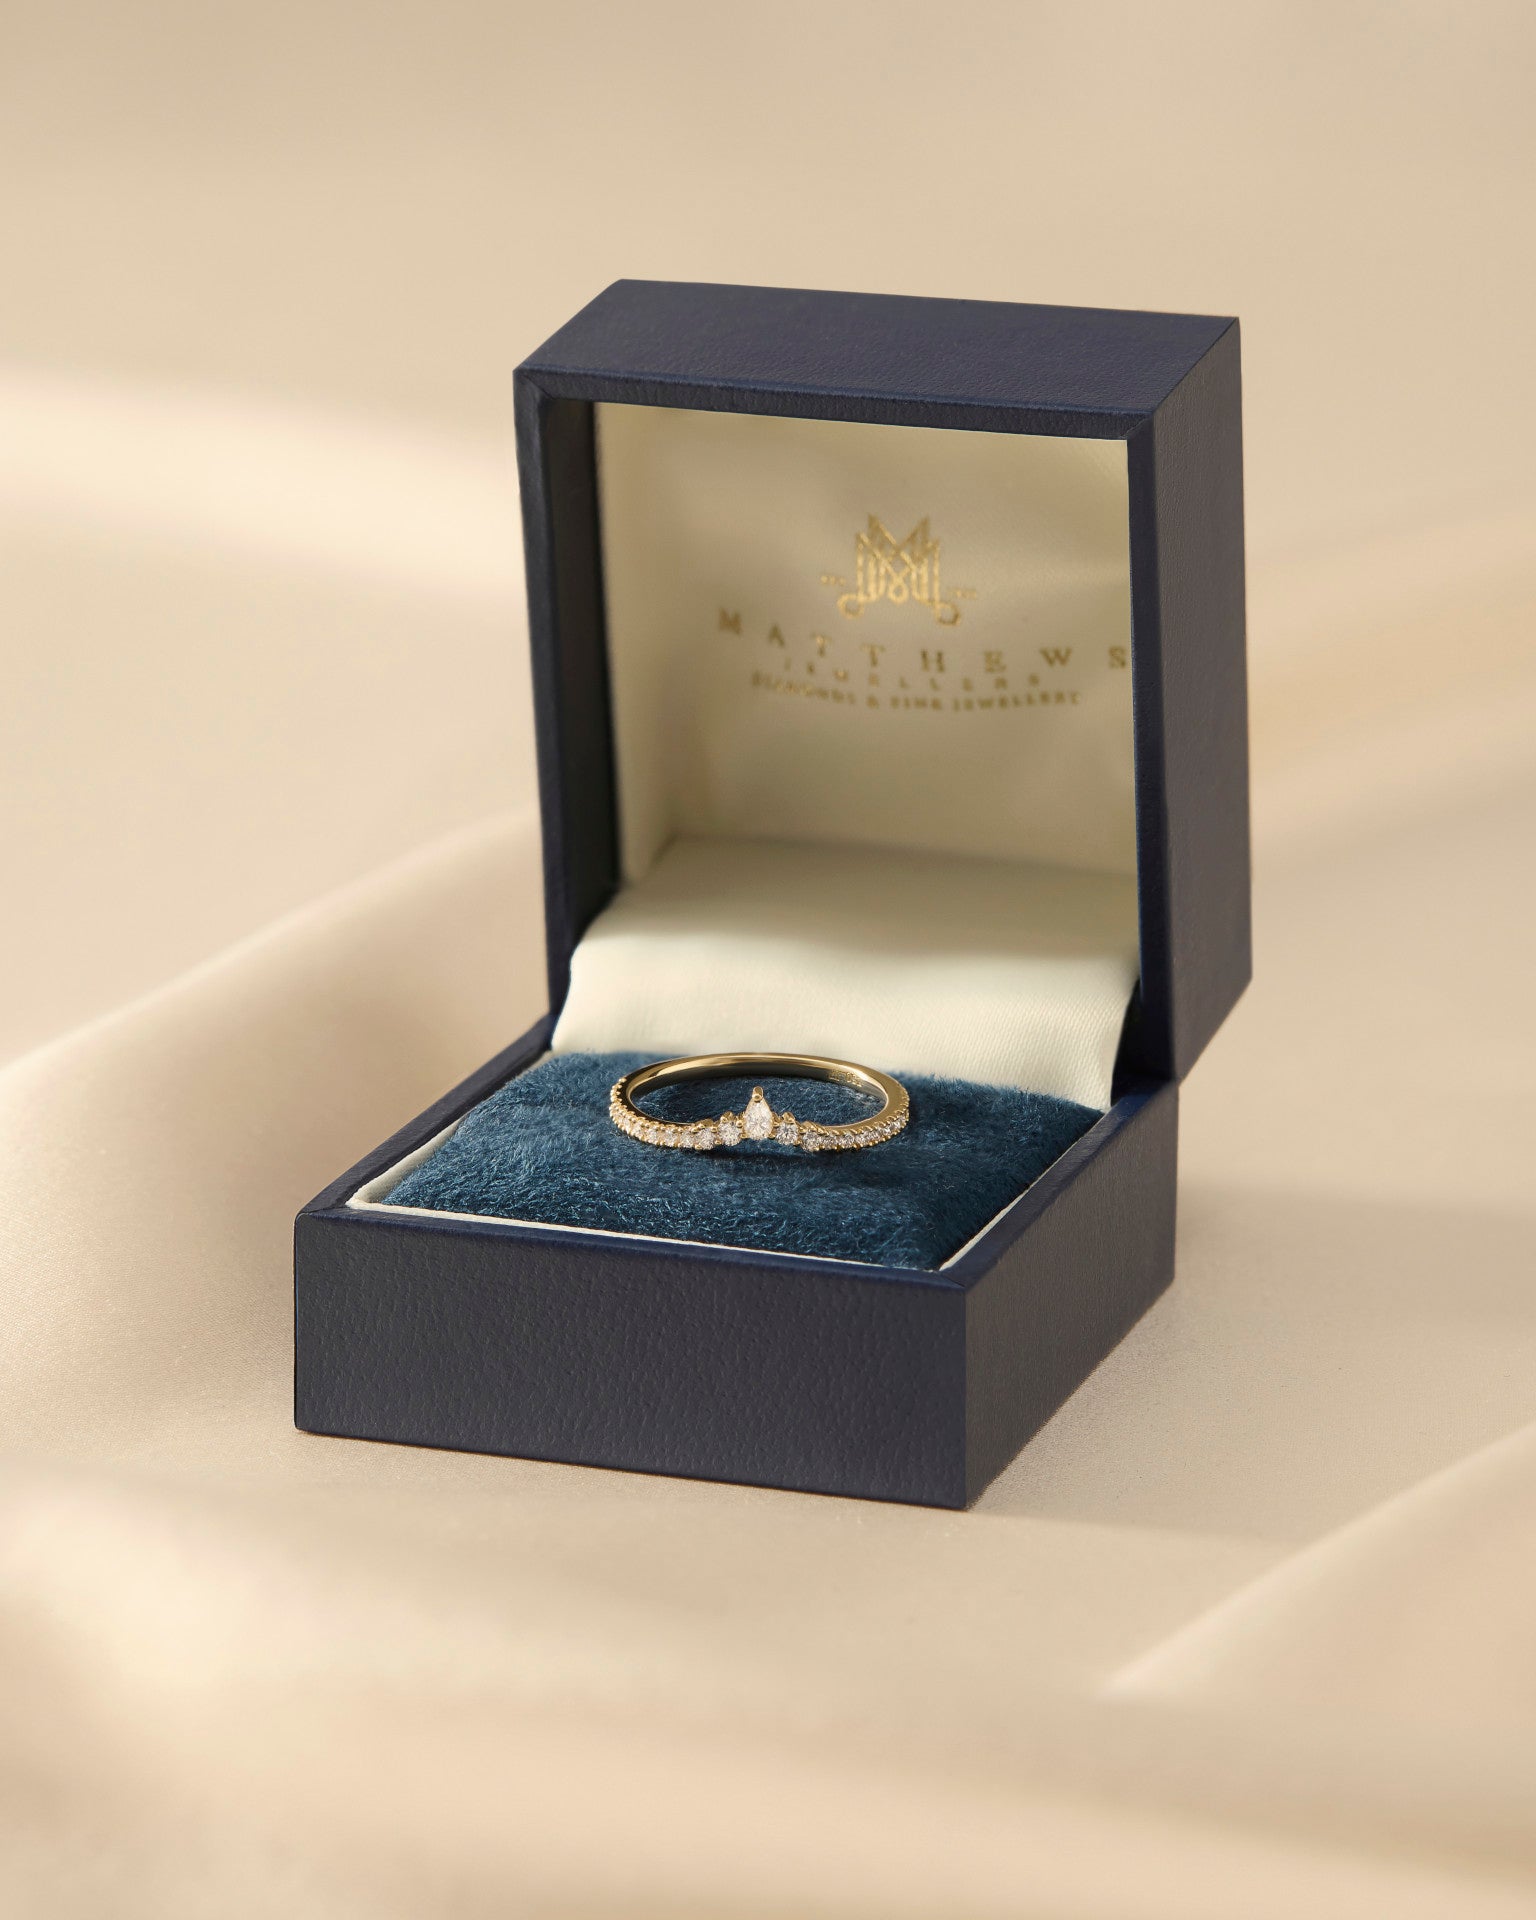 Pear and Round Cut Mini Crown Diamond Wedding Ring